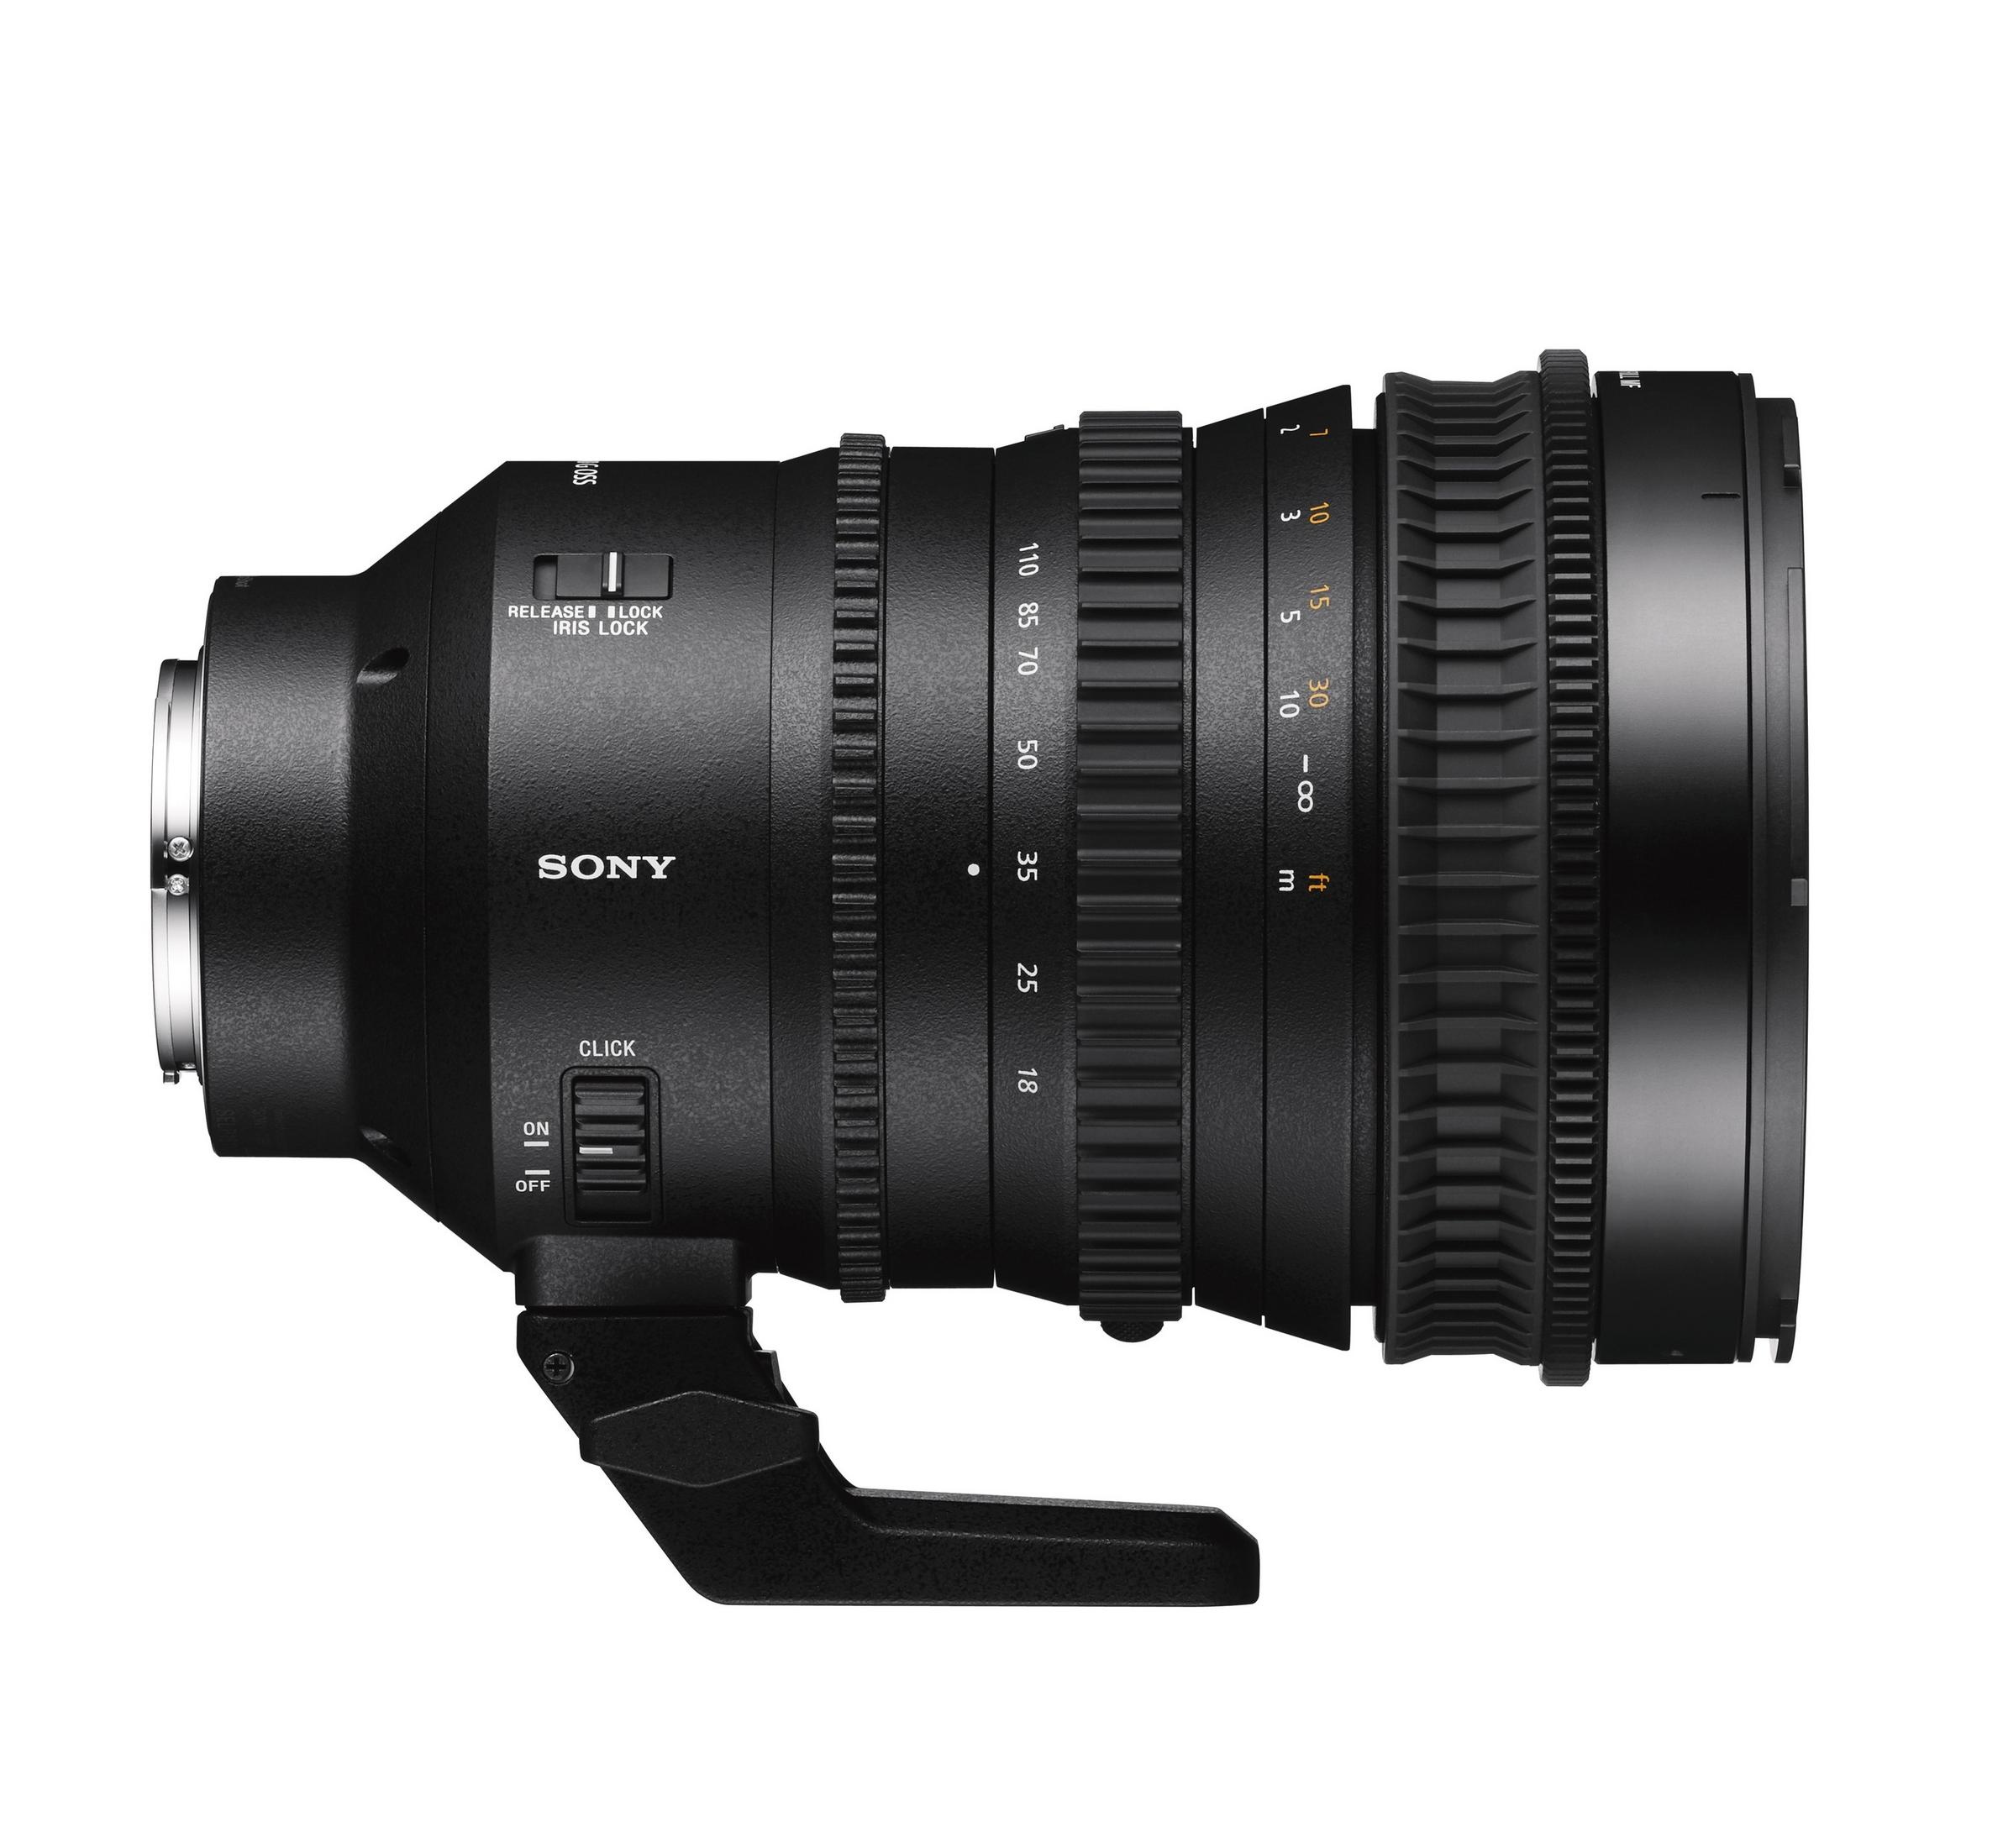 SONY SEL-P 18110 E-Mount, Schwarz) 18 mm - FE Sony f/4.0 POWERZOOM (F4) G 18-110MM DMR G-OBJEKTI 110 Blende, OSS, mm G-Lens, für (Objektiv Circulare